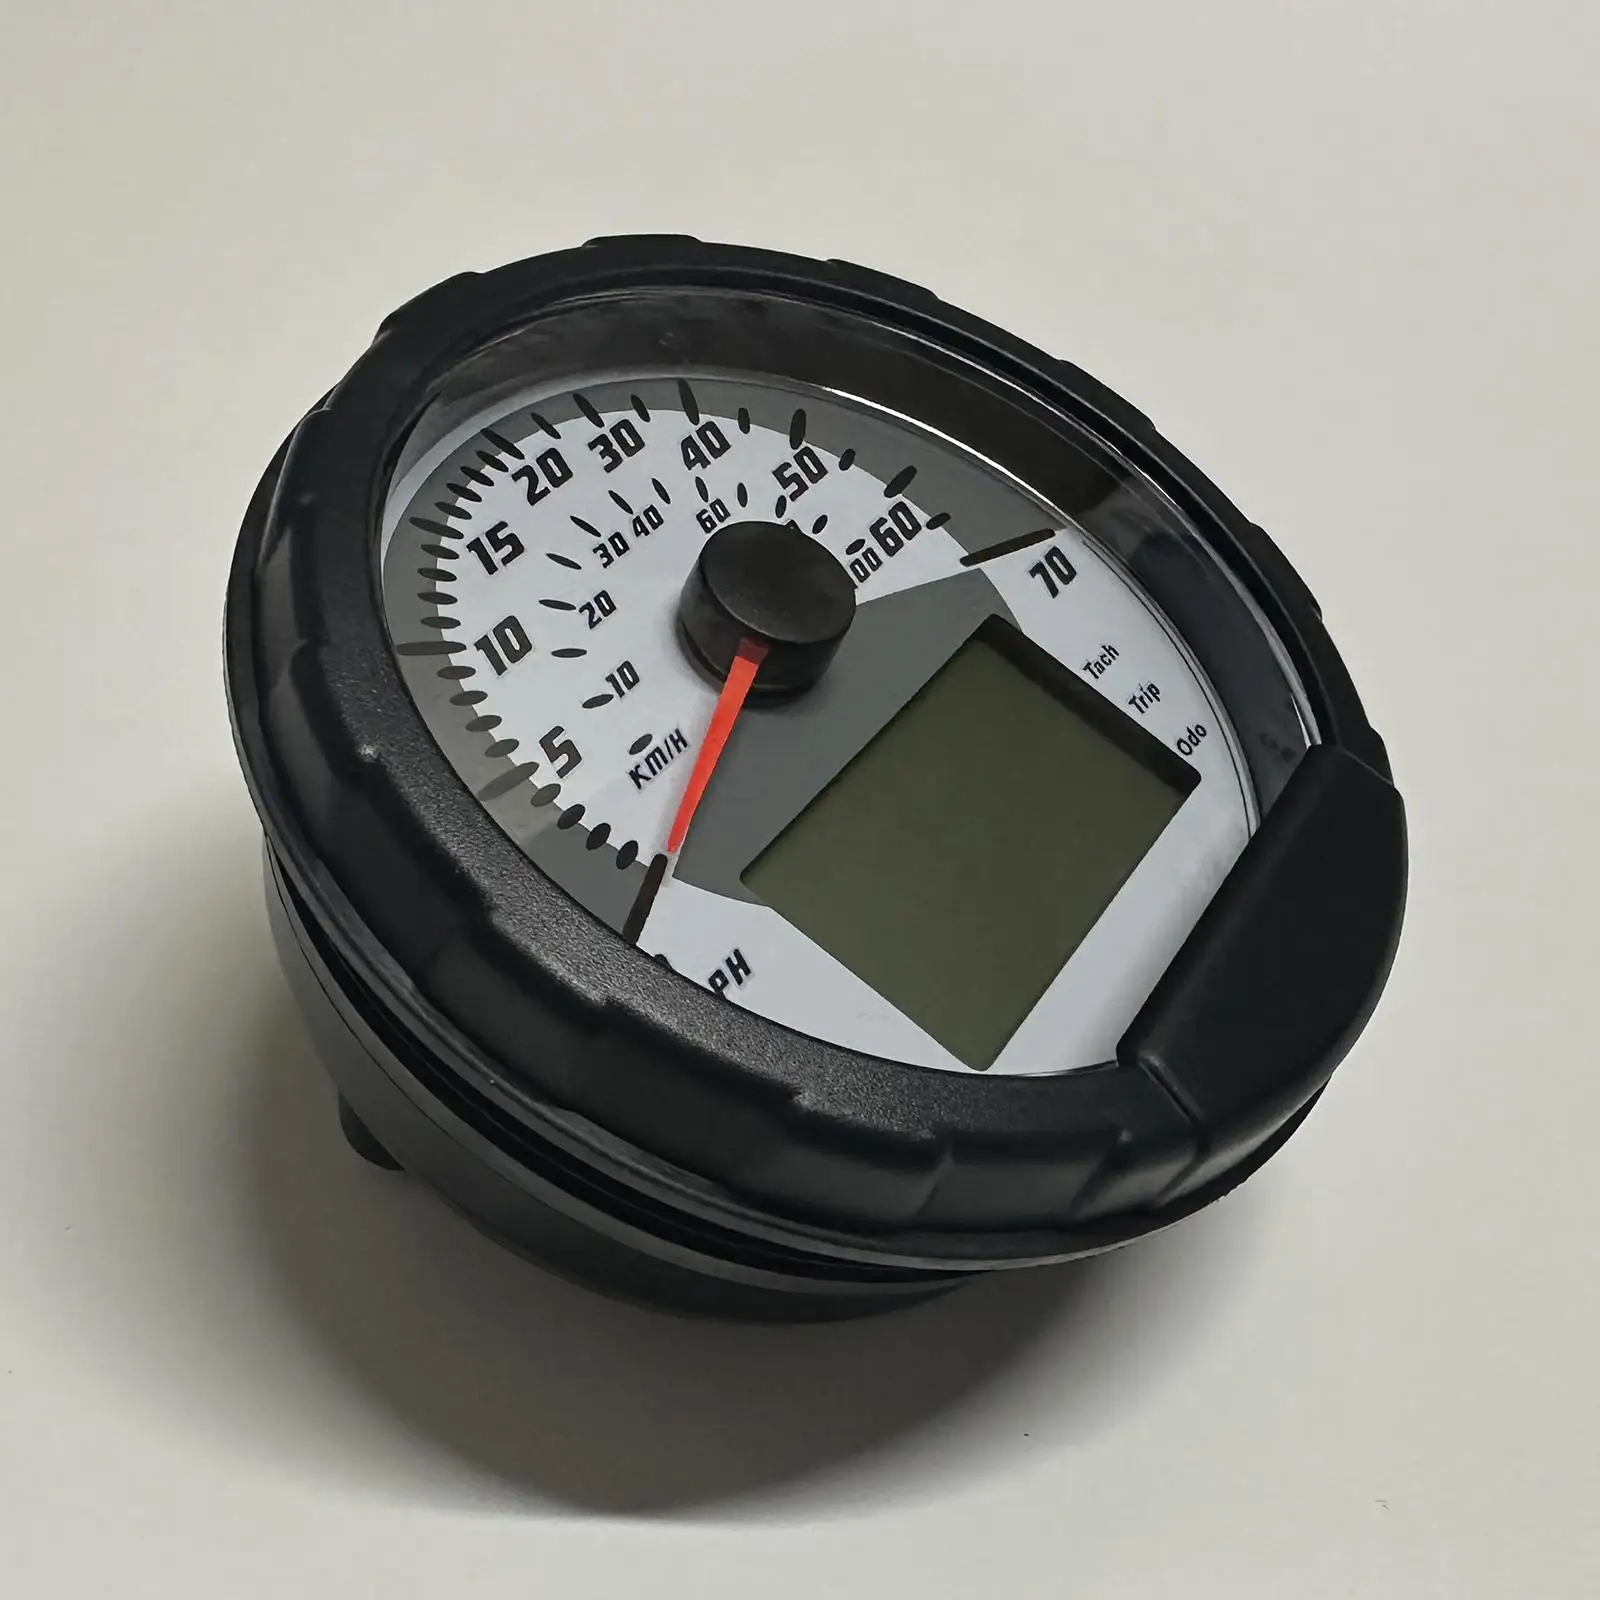 ATV Speedometer 3280431 Replaces Easy Installation Spare Parts Digital Display Speedo Tach Gauges for Sportsman 400